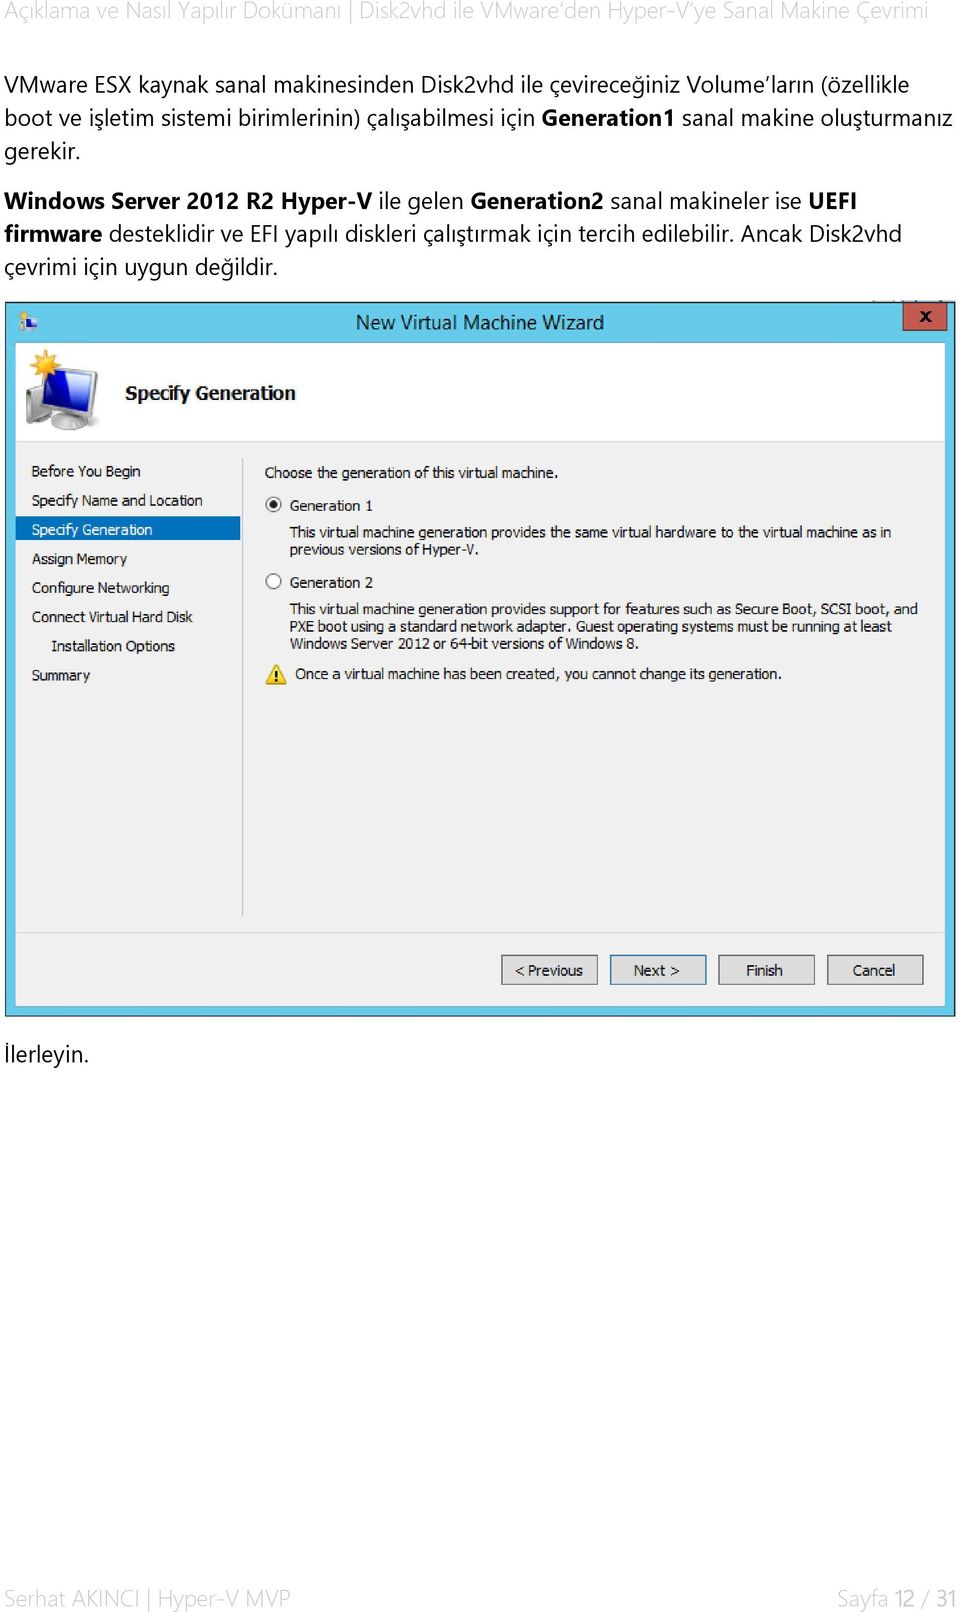 Windows Server 2012 R2 Hyper-V ile gelen Generation2 sanal makineler ise UEFI firmware desteklidir ve EFI